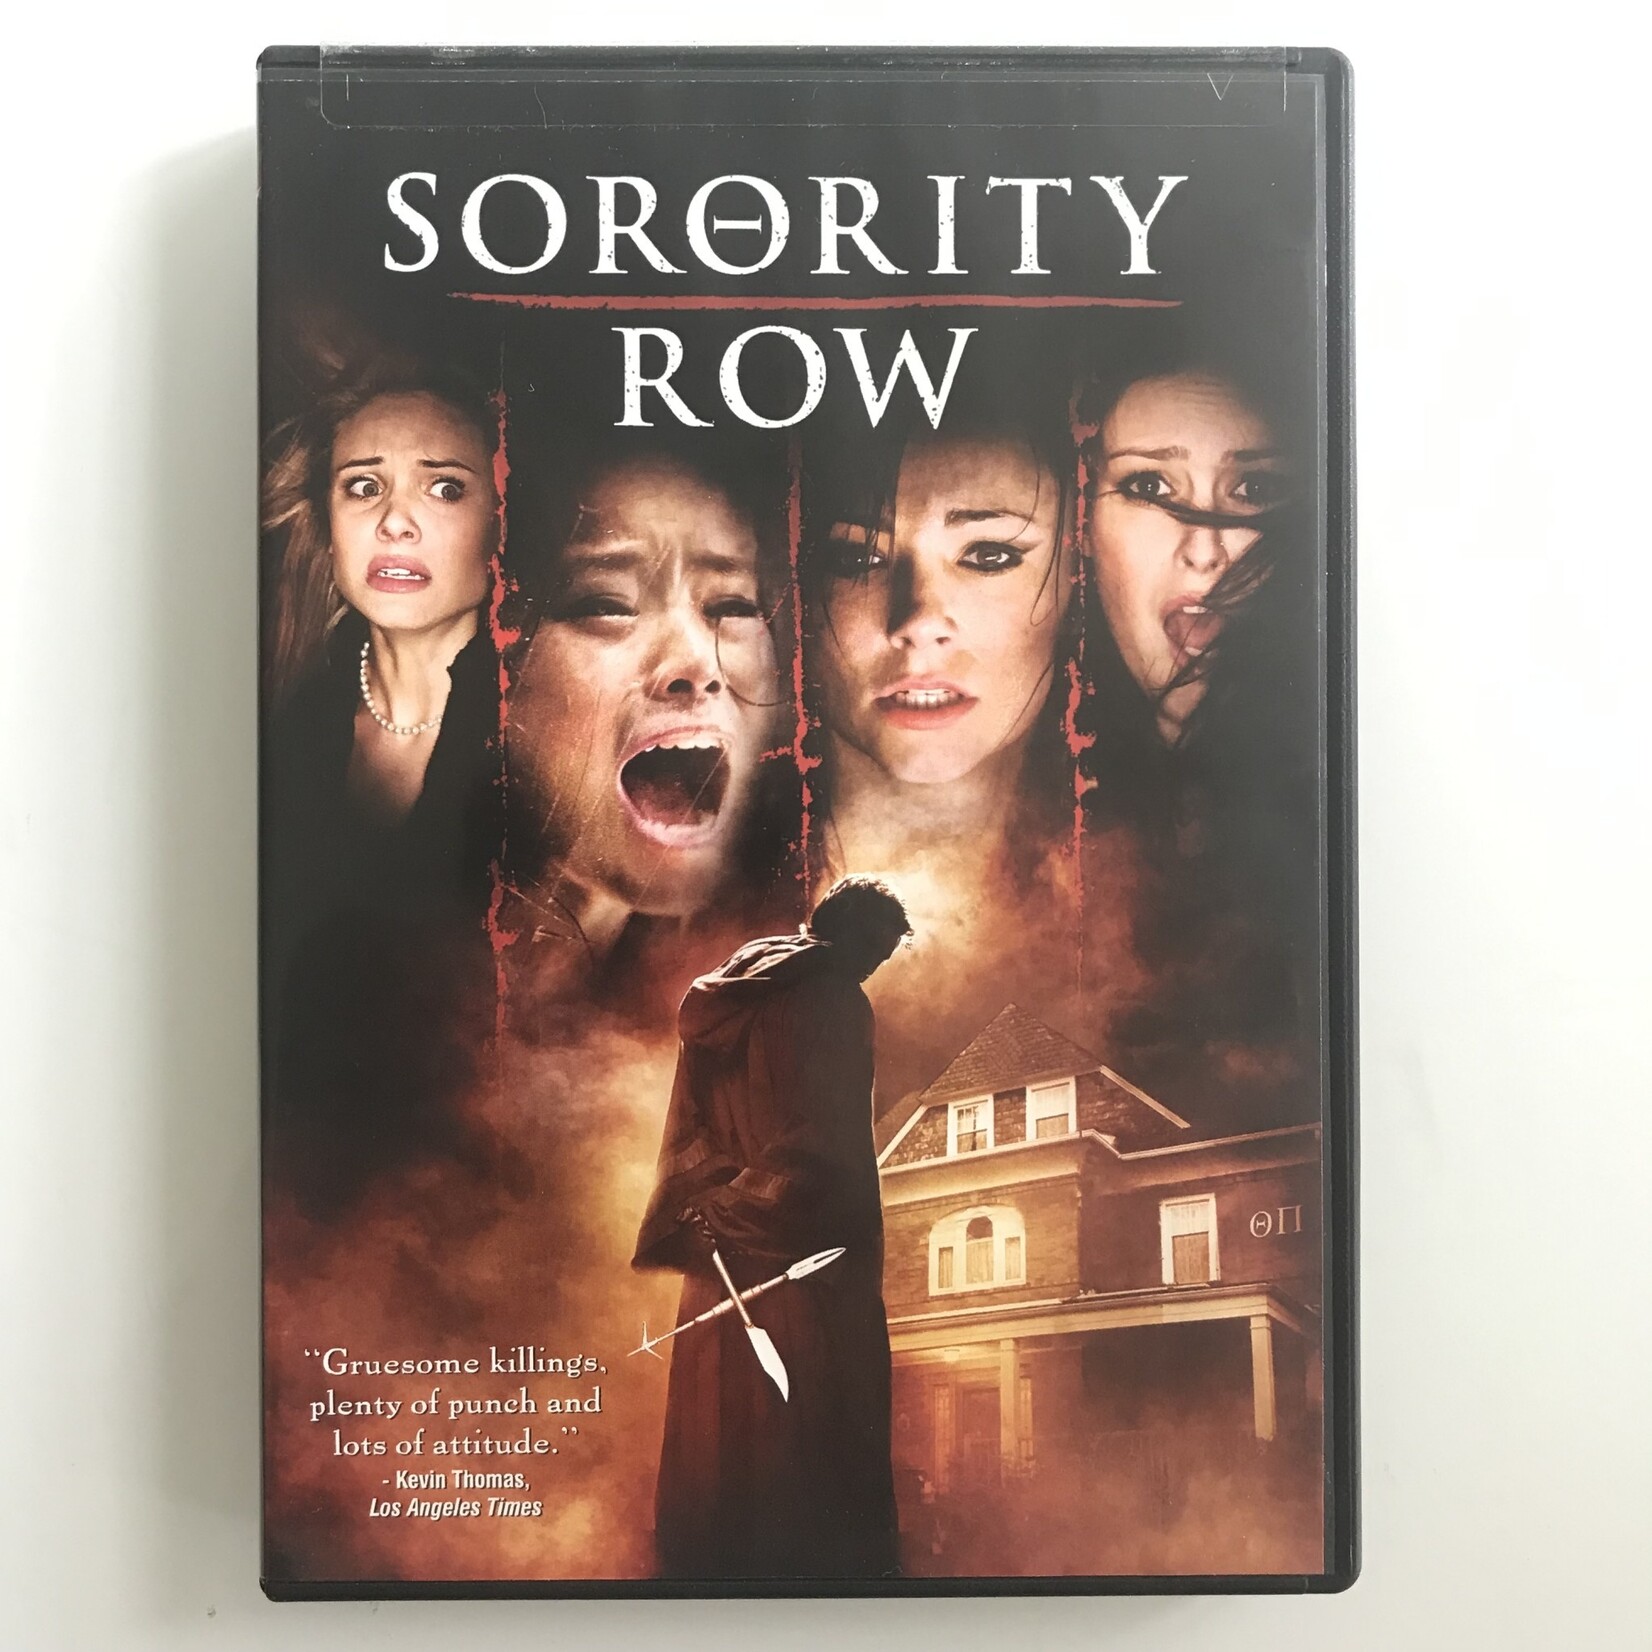 Sorority Row - DVD (USED)